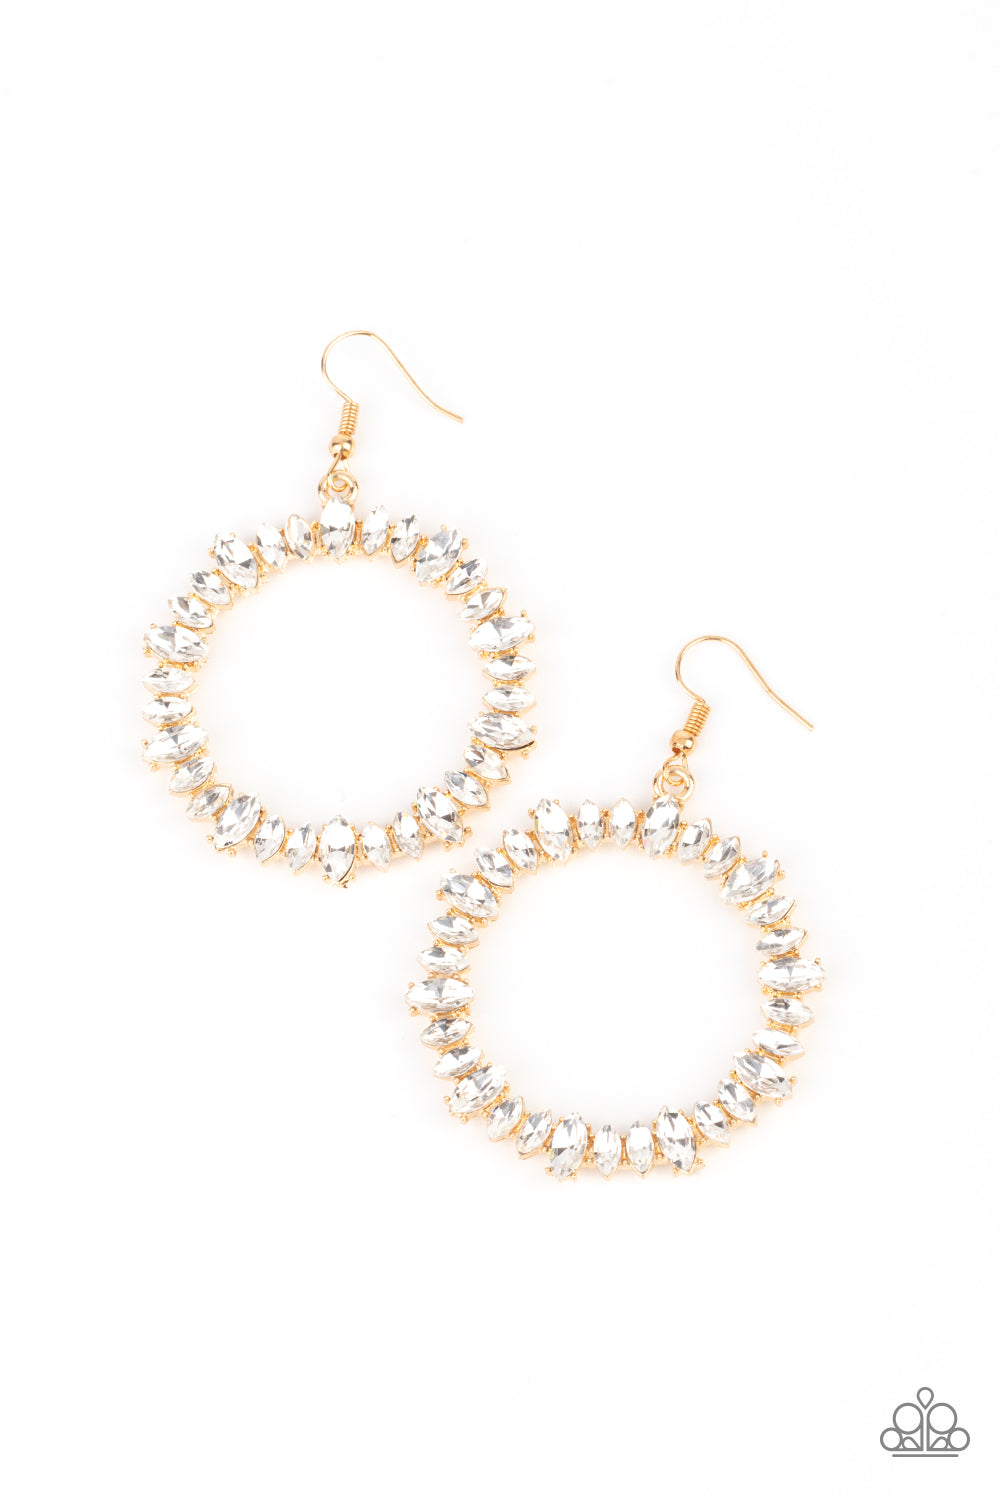 Paparazzi Accessories - Glowing Reviews #E537 - Gold Earrings